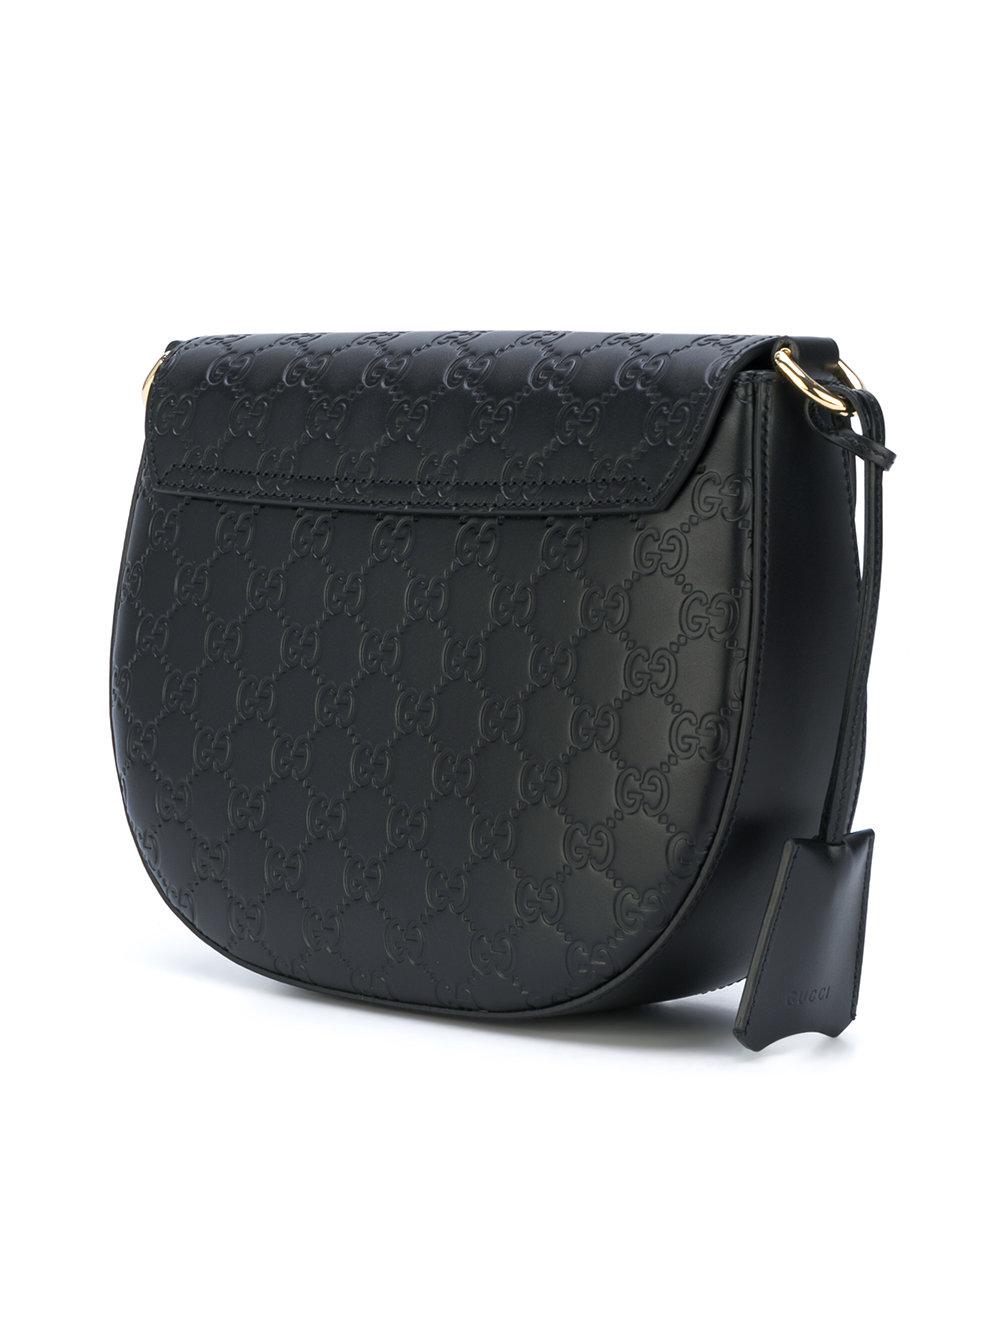 Gucci Leather Padlock Signature Shoulder Bag in Black - Lyst